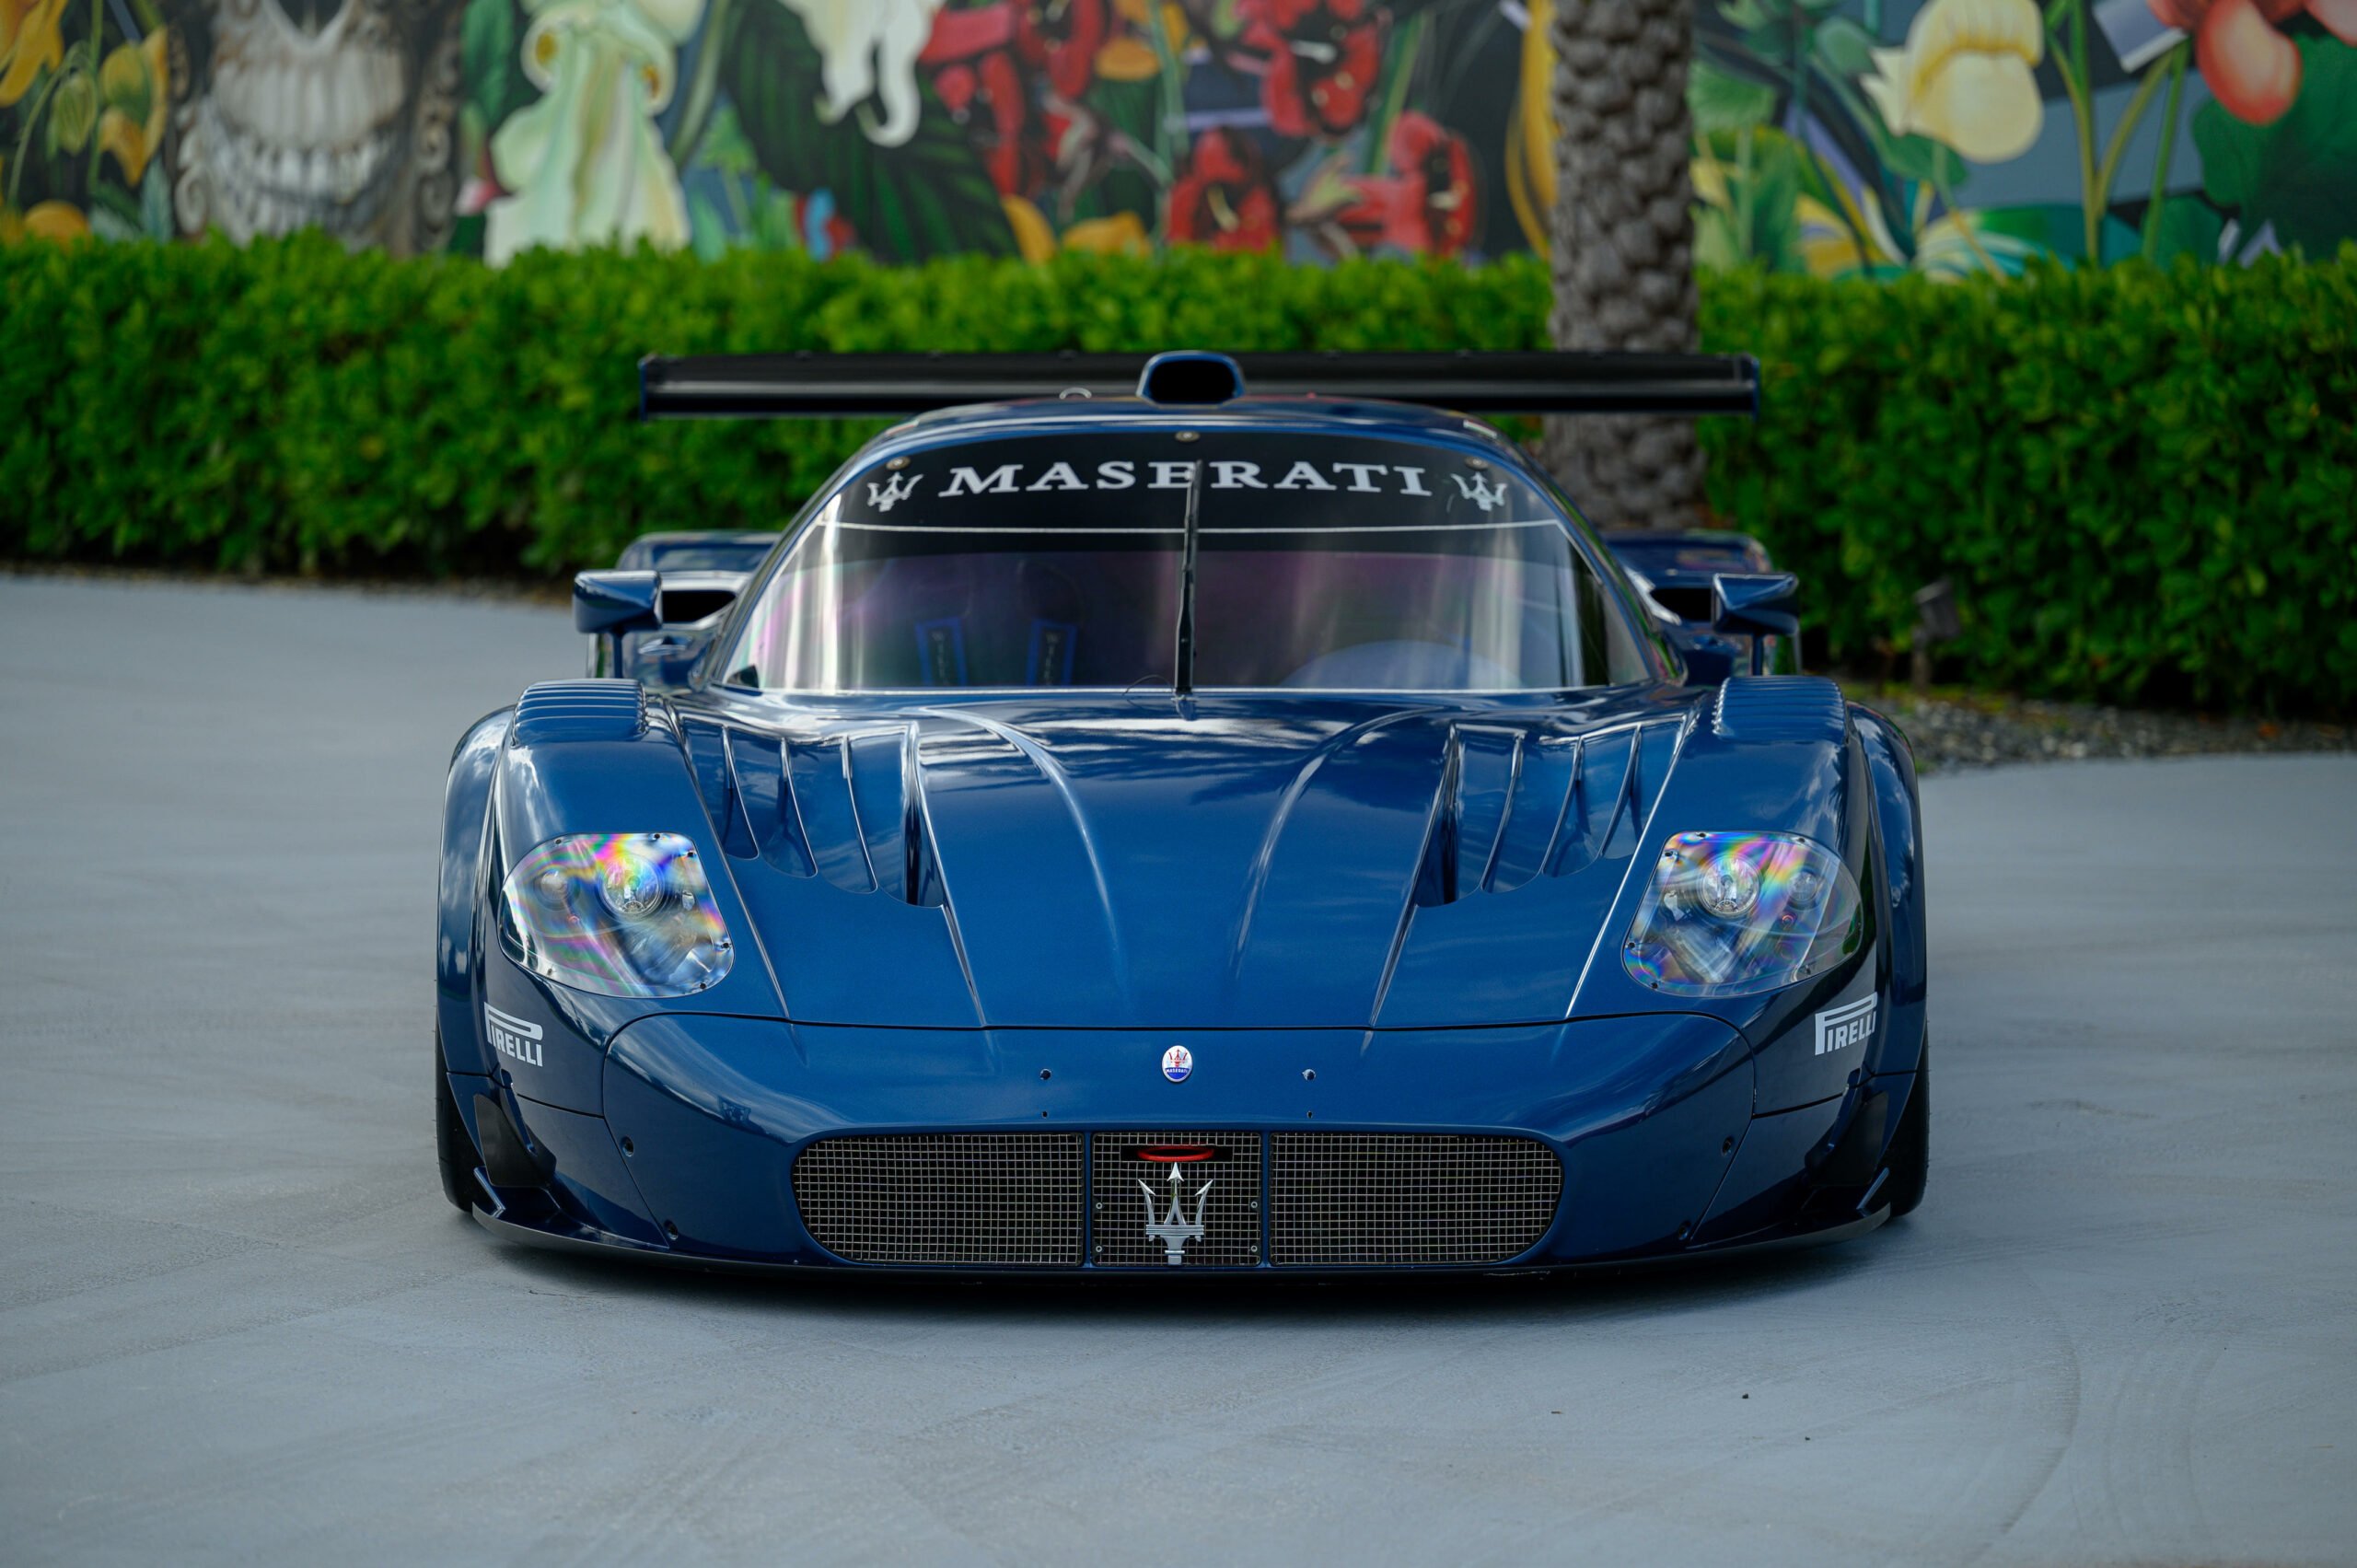 Maserati MC12 Corse Up for Auction